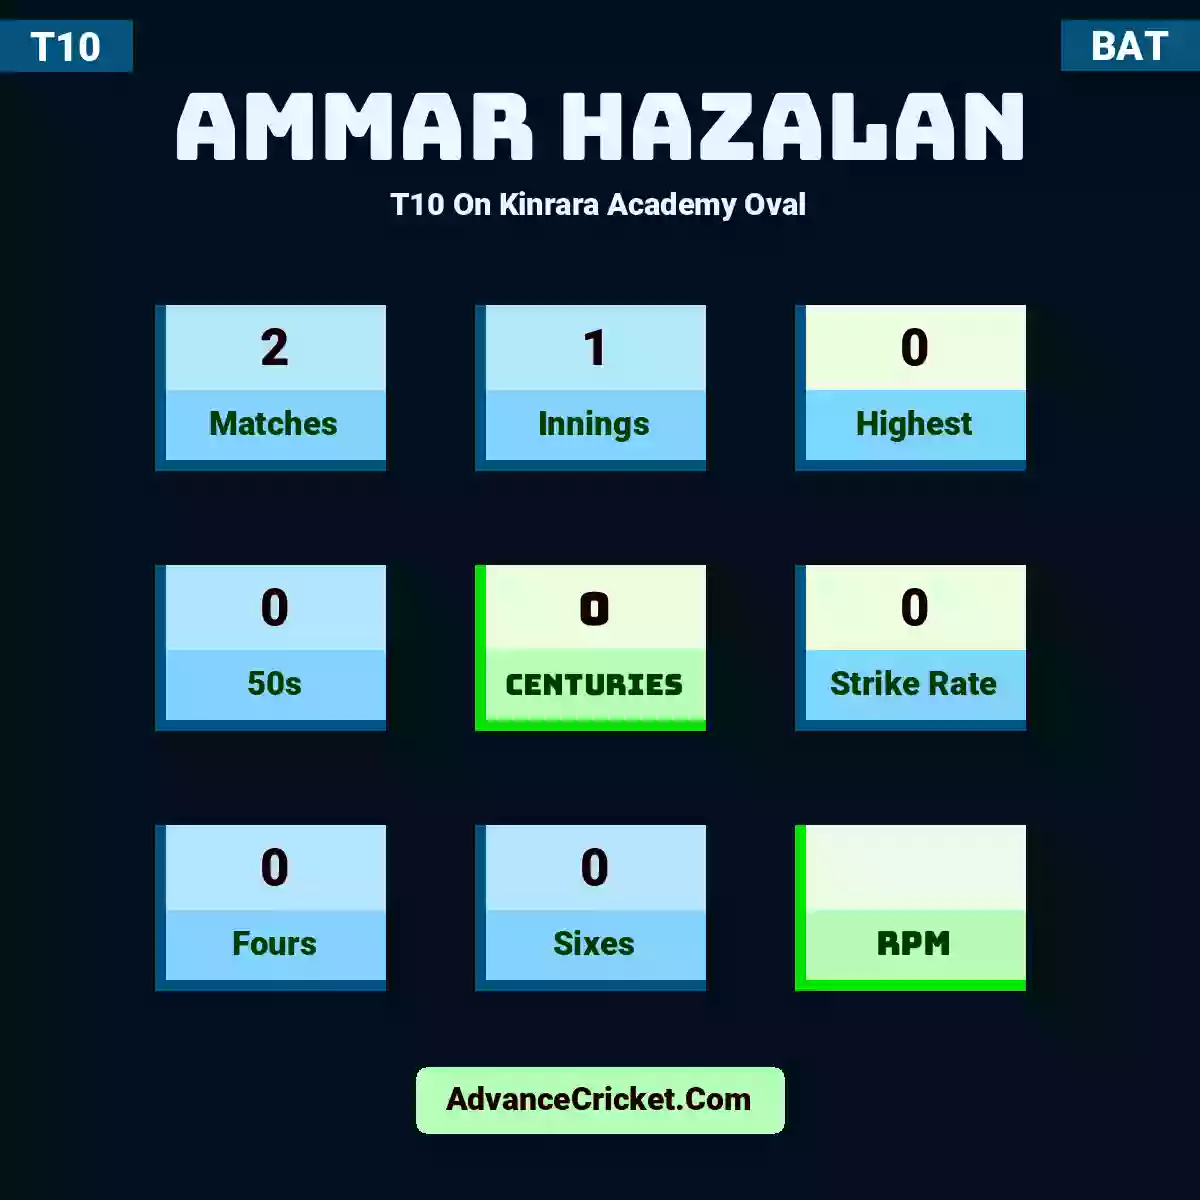 Ammar Hazalan T10  On Kinrara Academy Oval, Ammar Hazalan played 2 matches, scored 0 runs as highest, 0 half-centuries, and 0 centuries, with a strike rate of 0. A.Hazalan hit 0 fours and 0 sixes.